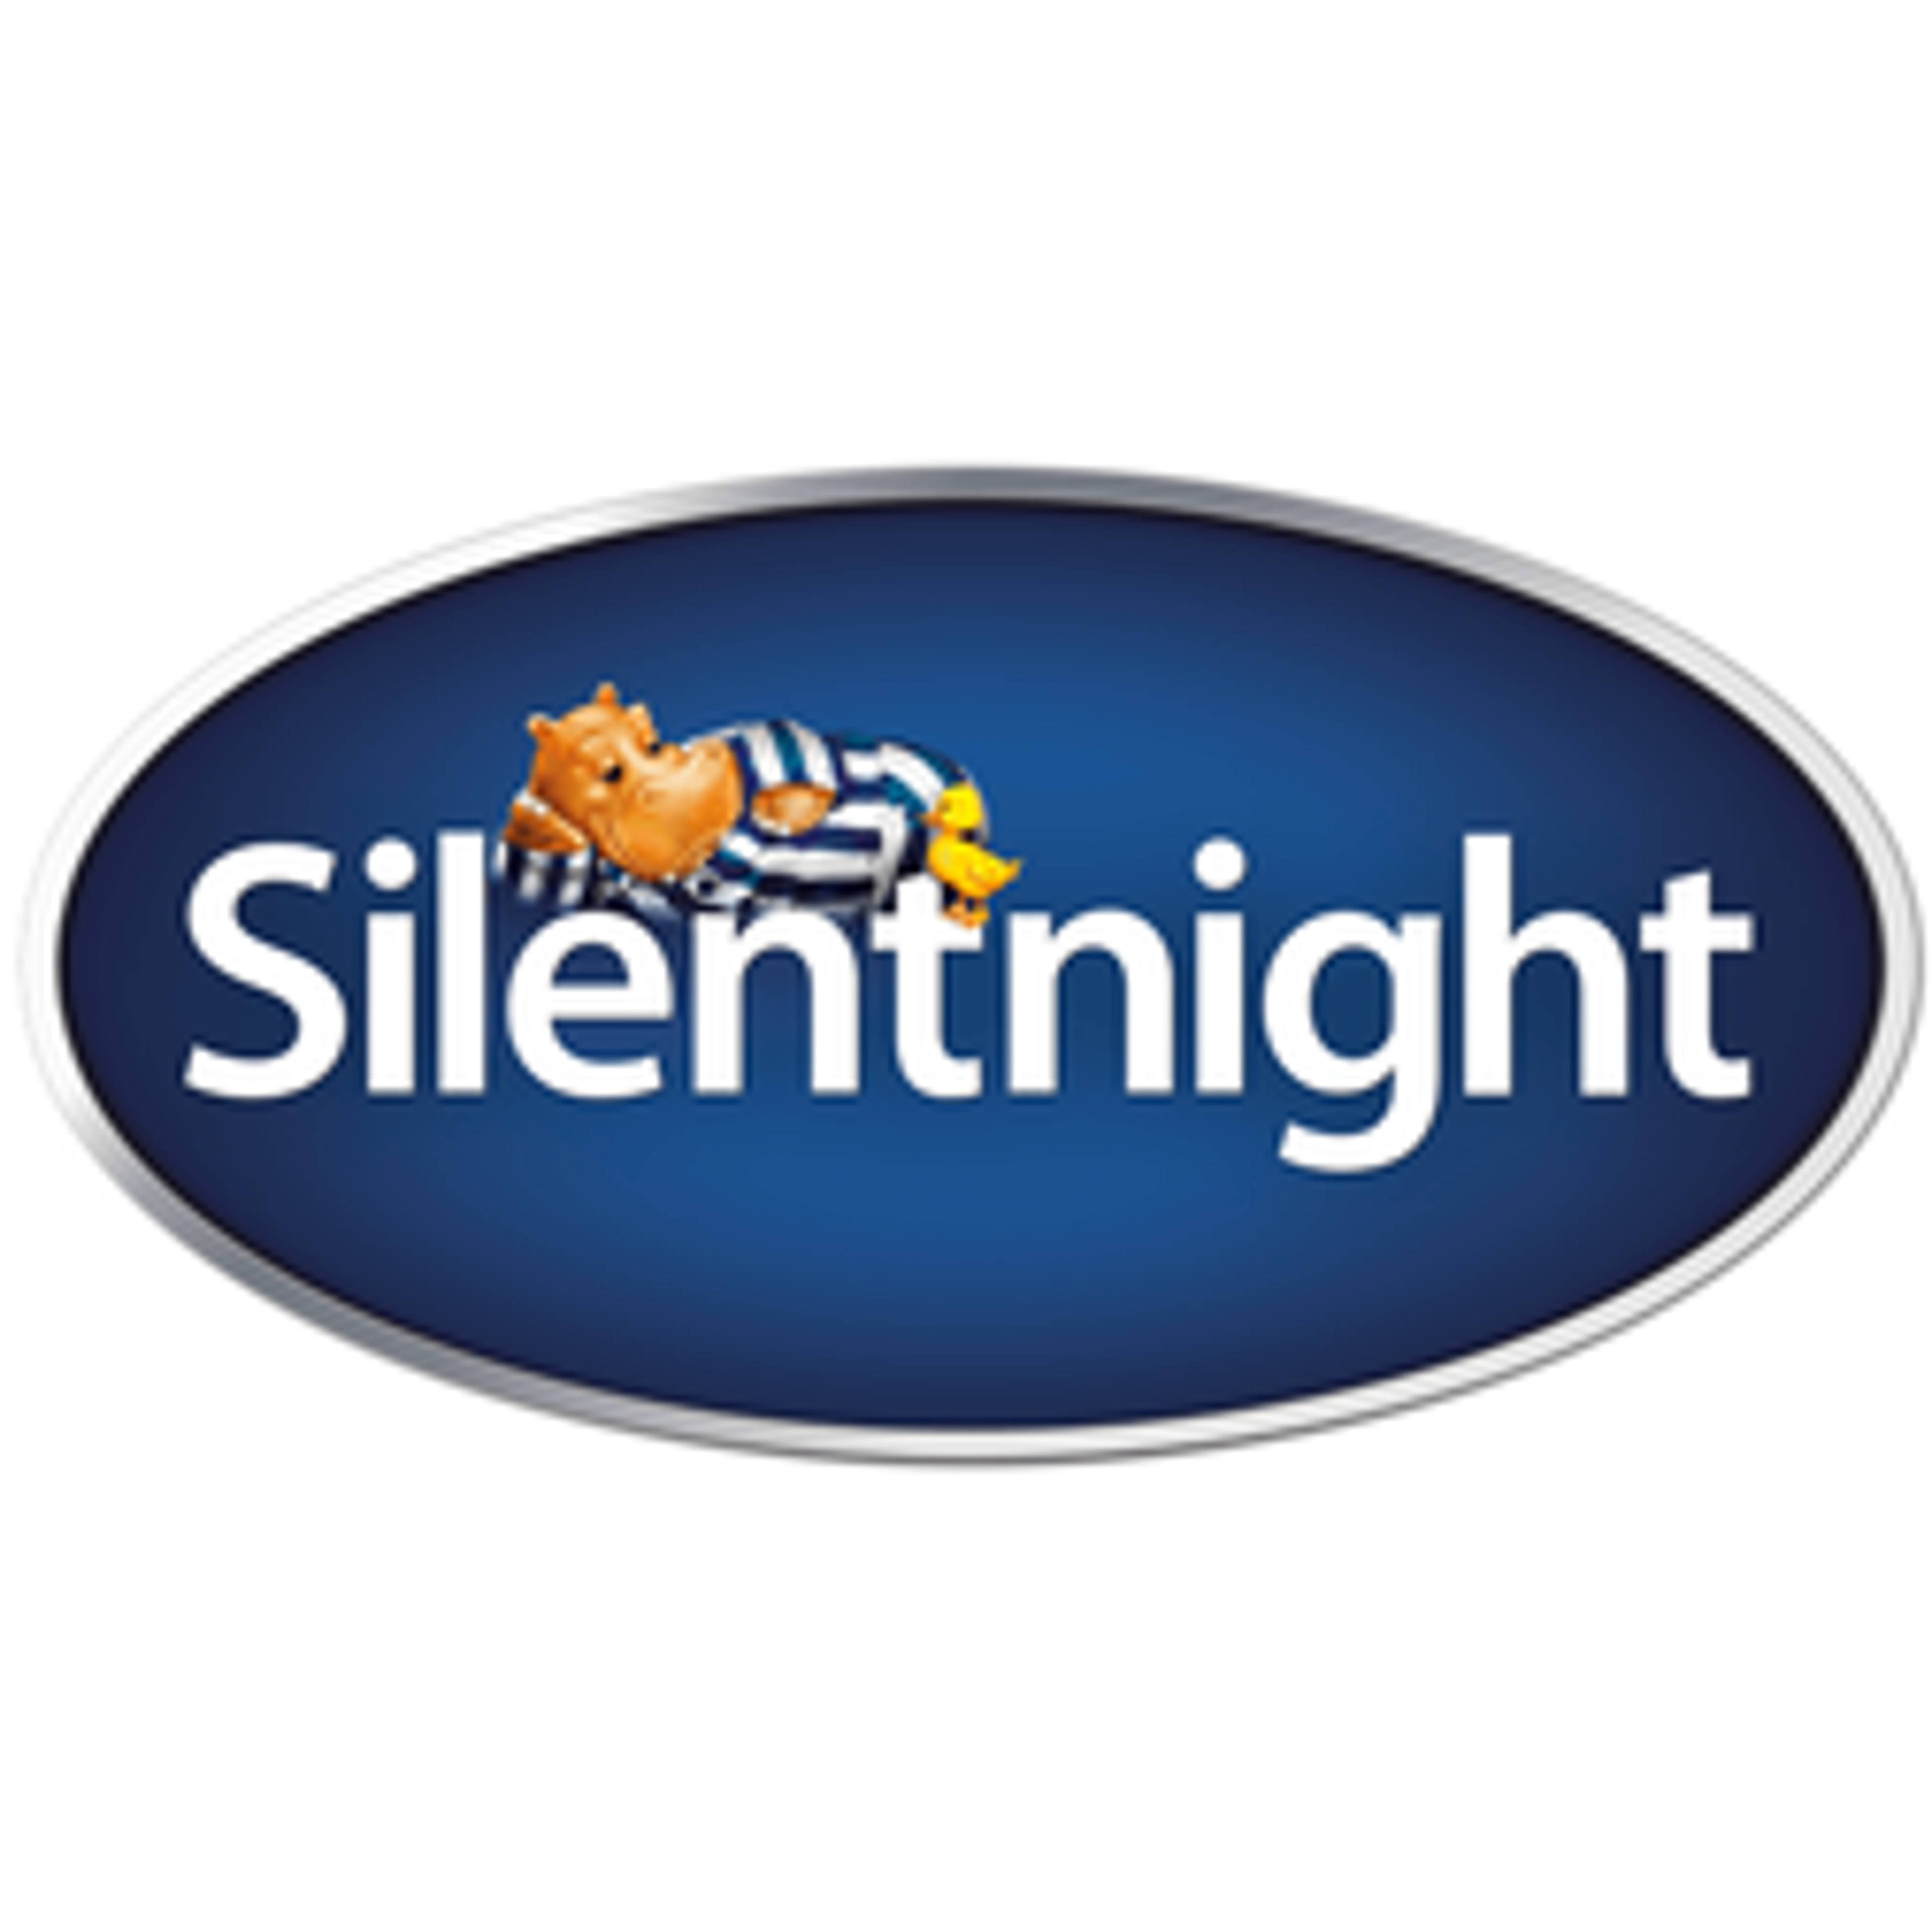  Silentnight 